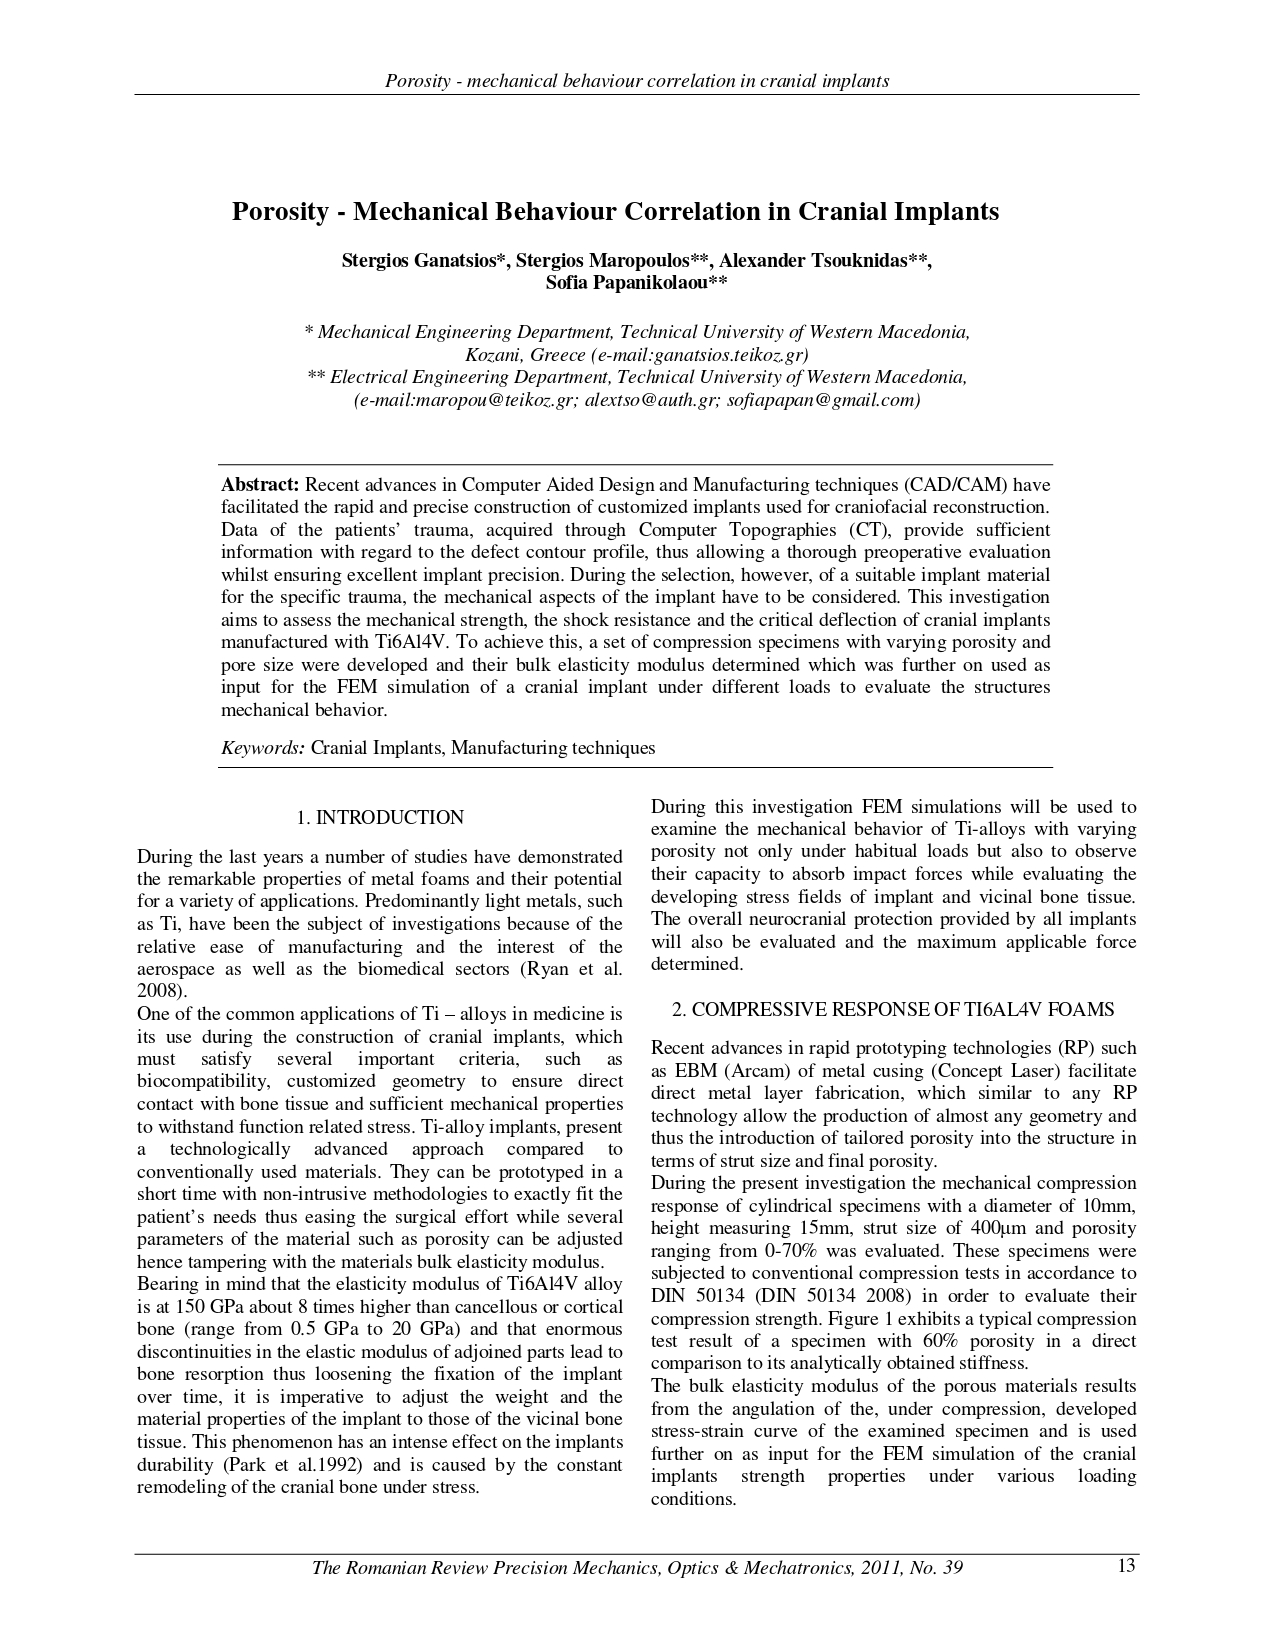 Porosity - Mechanical Behaviour Correlation in Cranial Implants